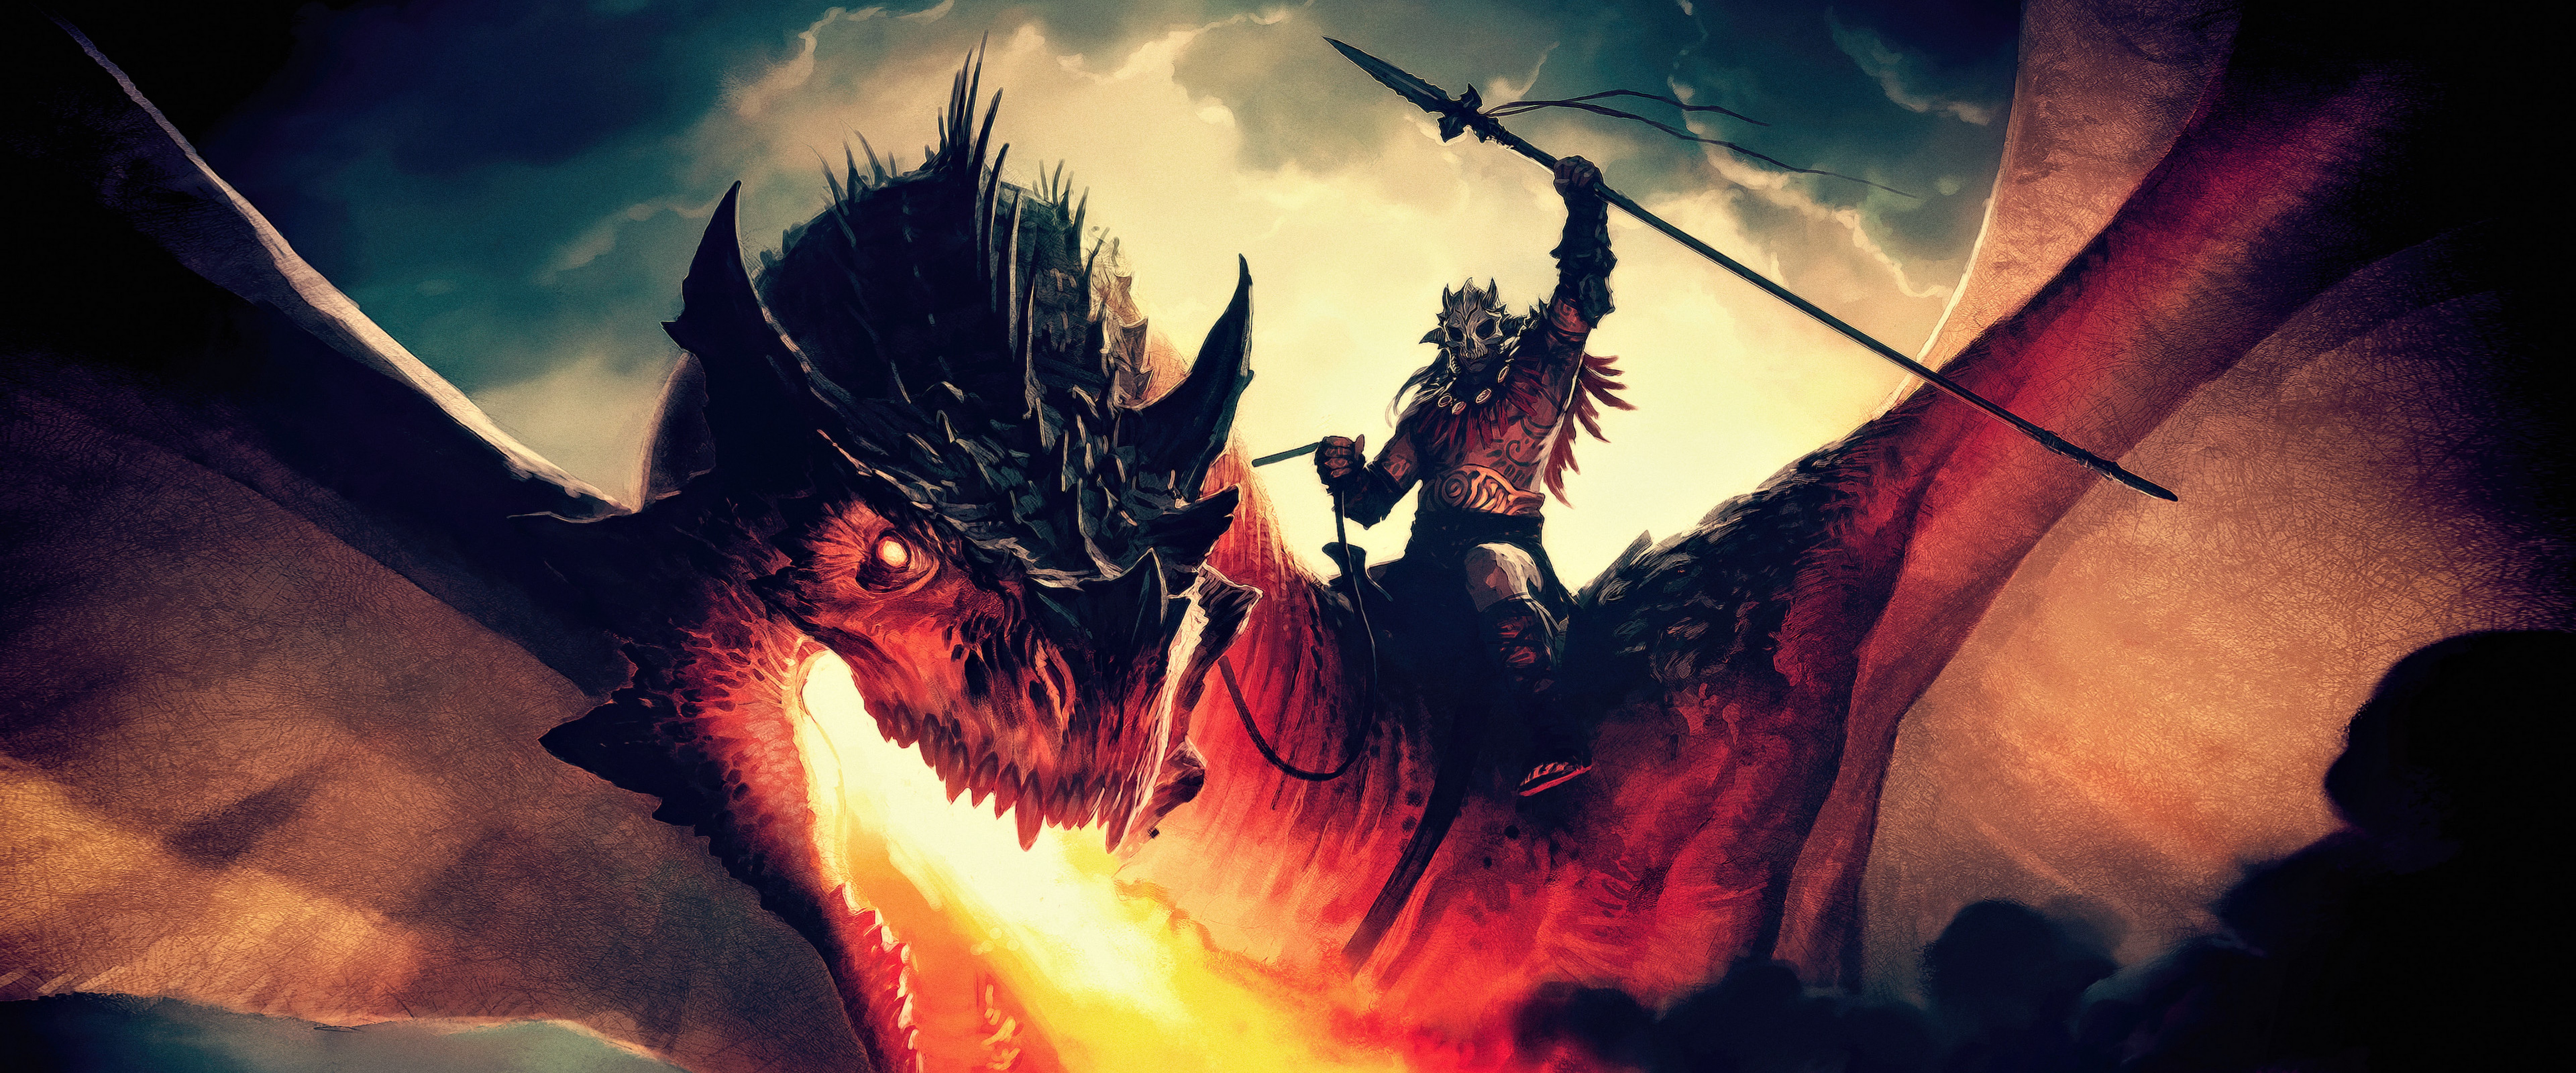 Dragon Fire Art
 Wallpapers